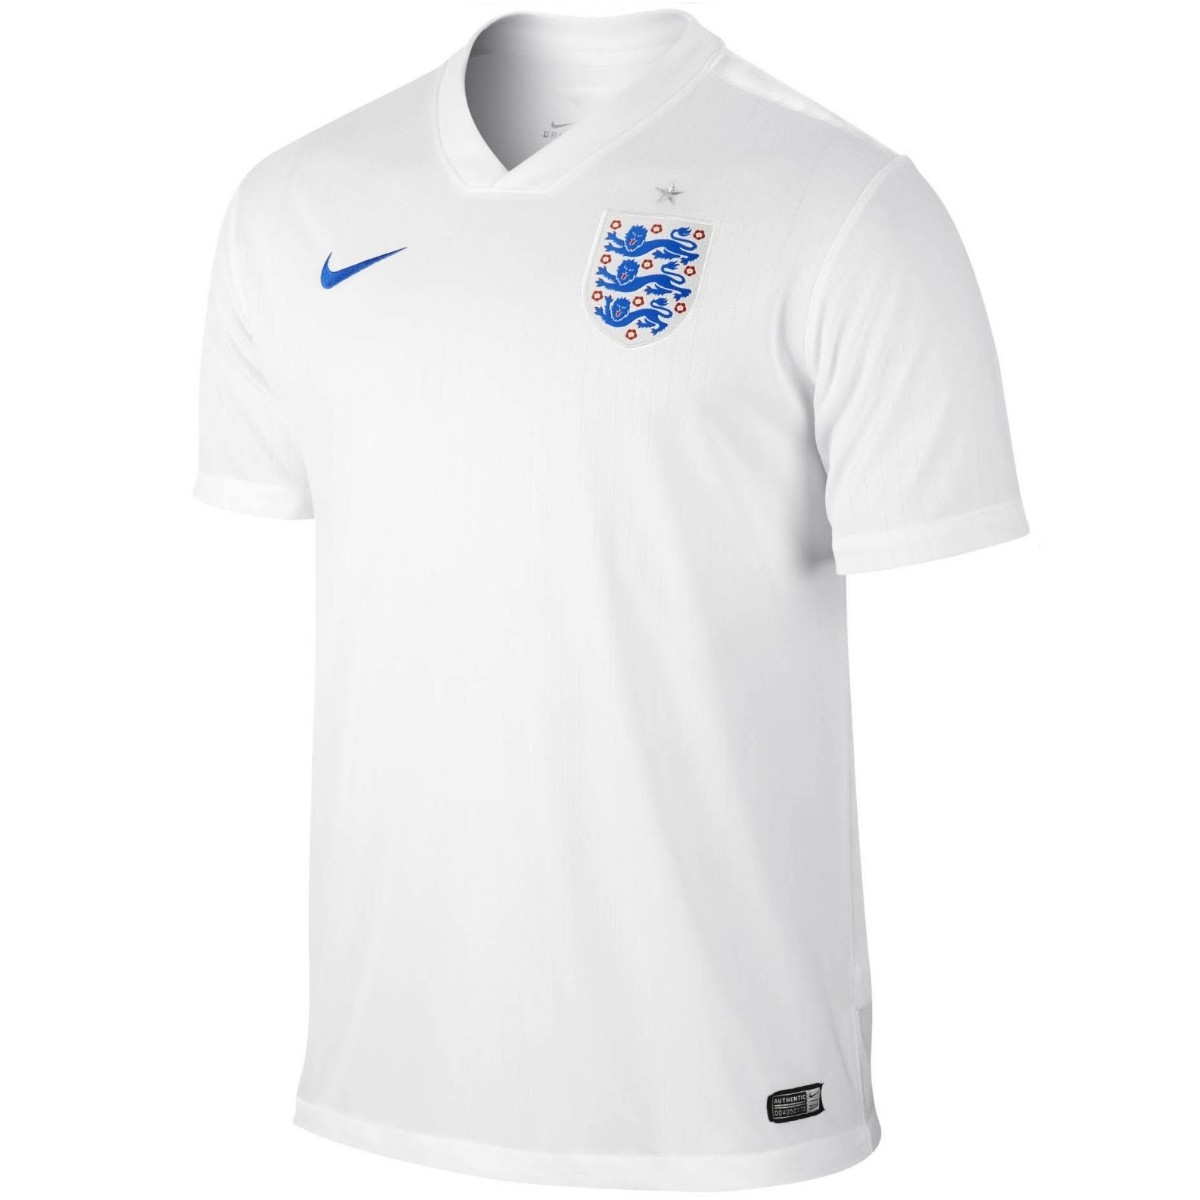 england national soccer team jersey